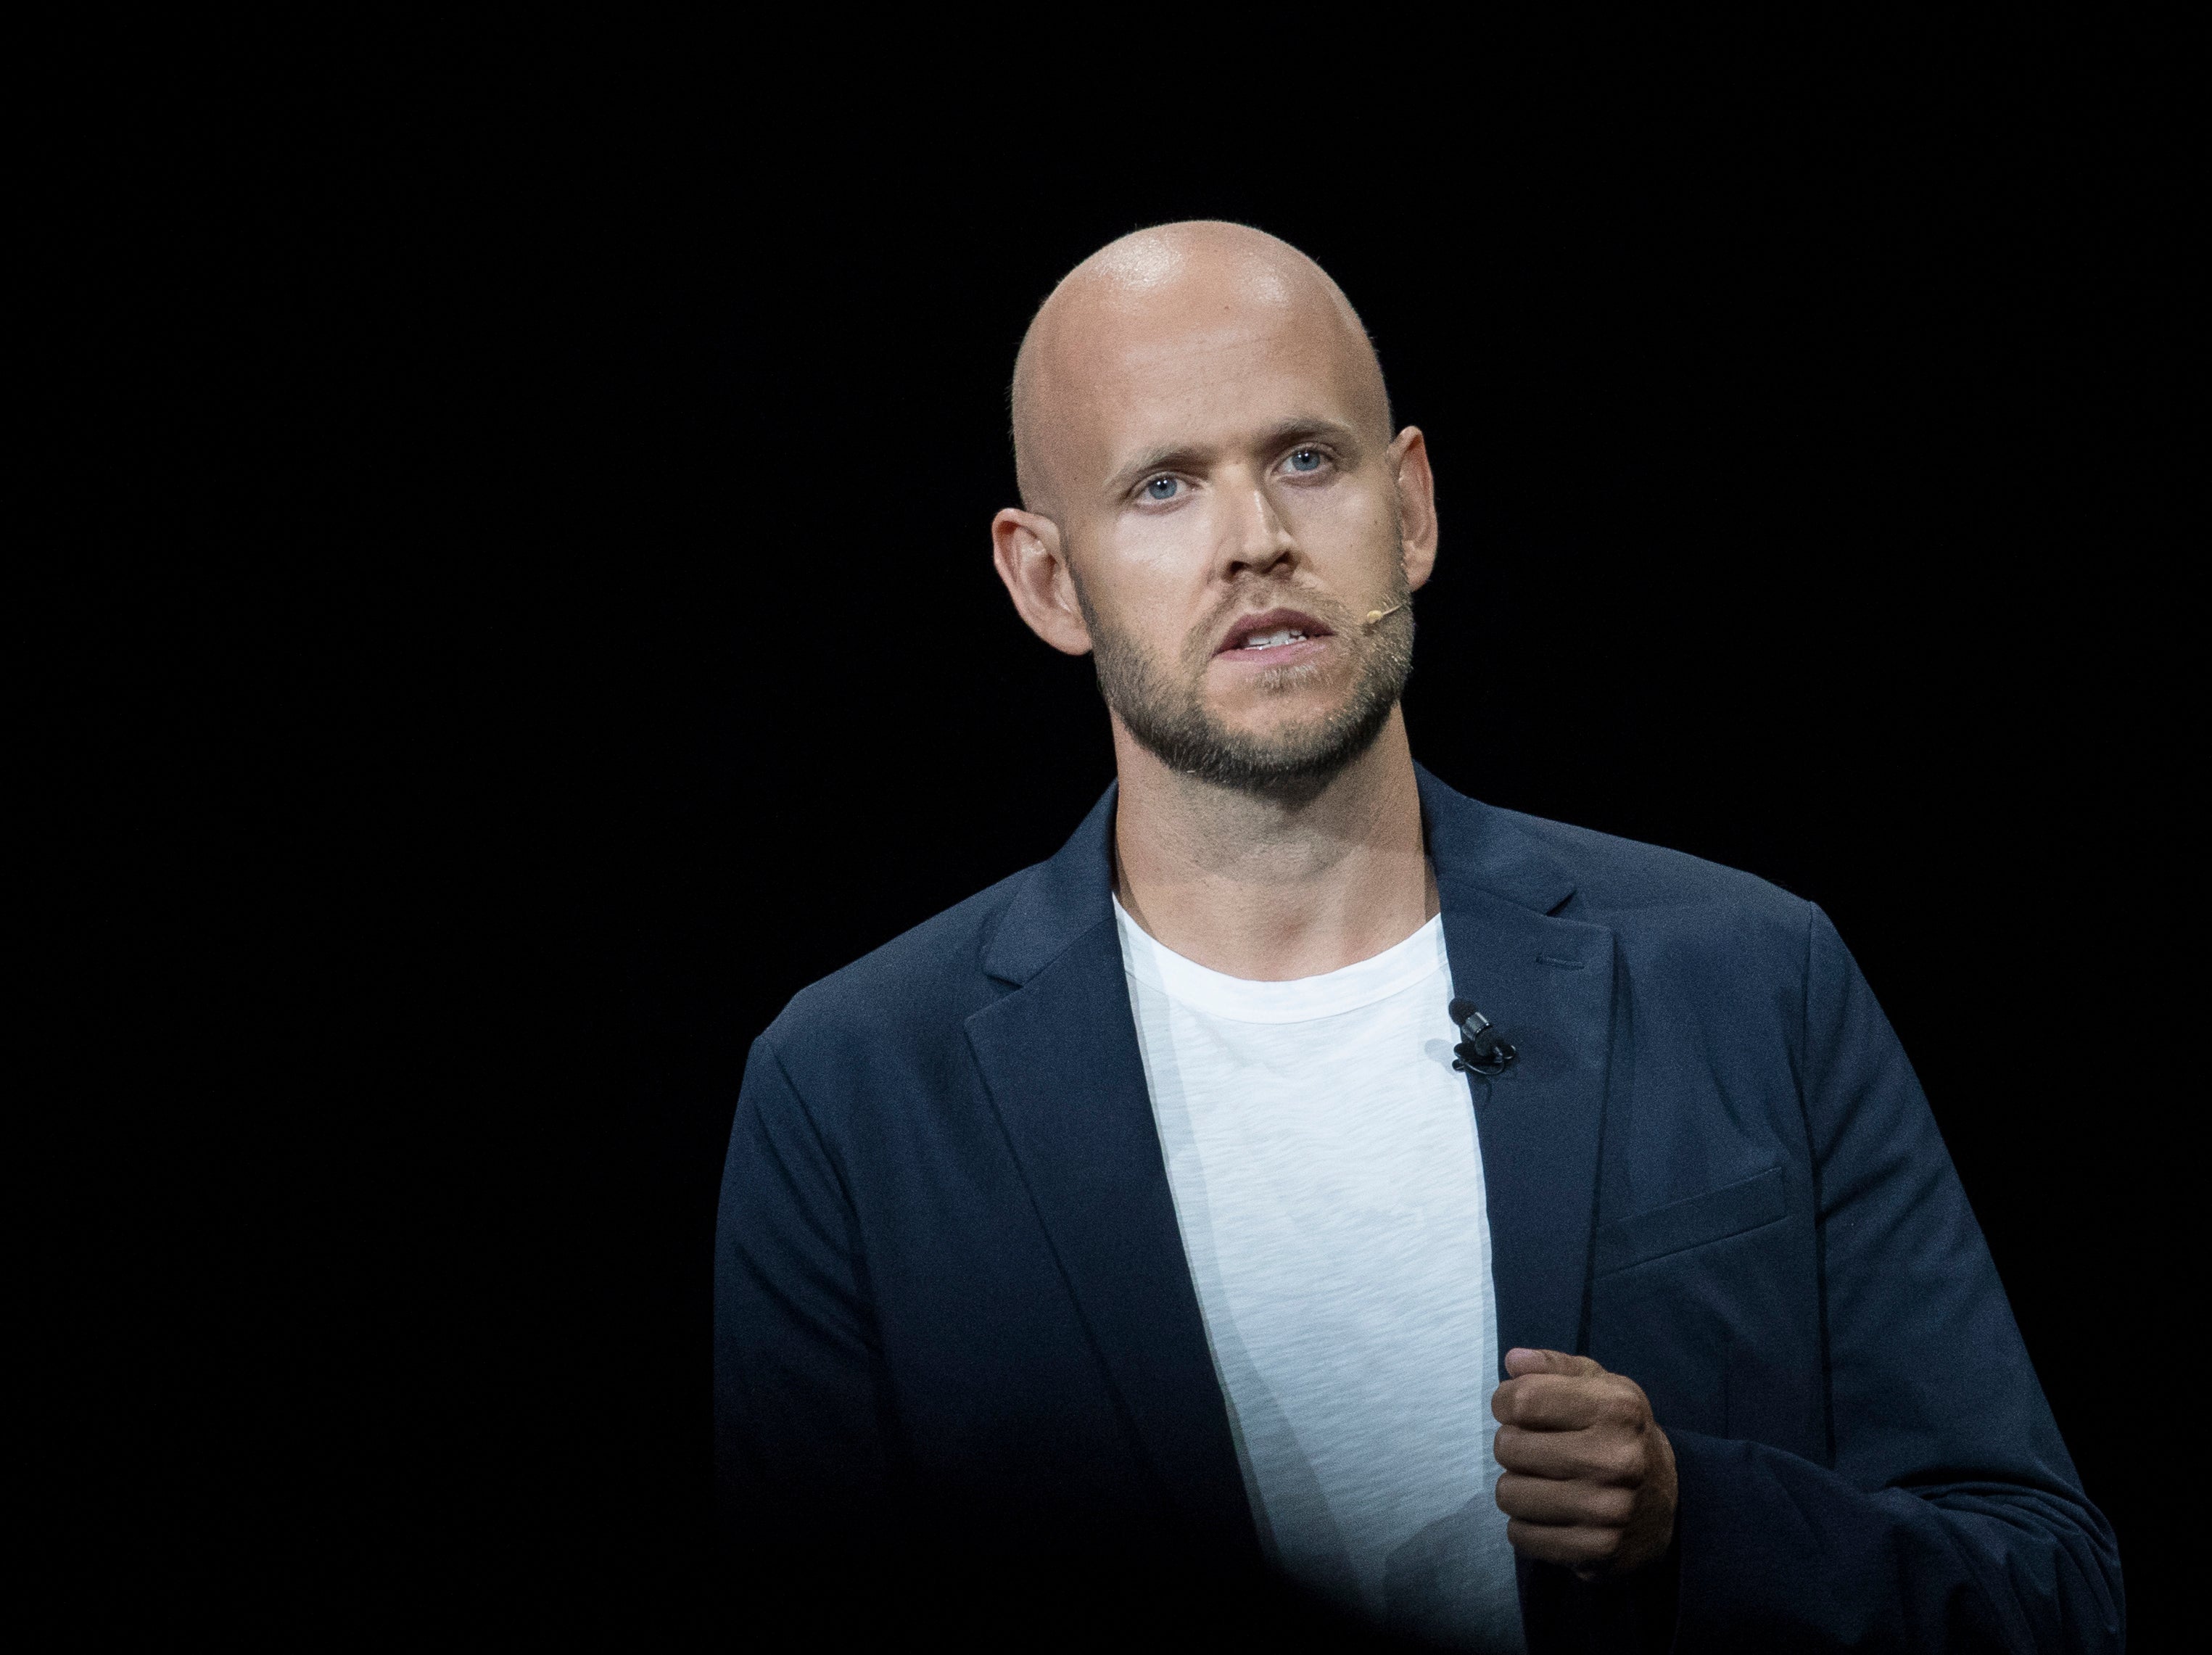 Spotify founder and CEO Daniel Ek